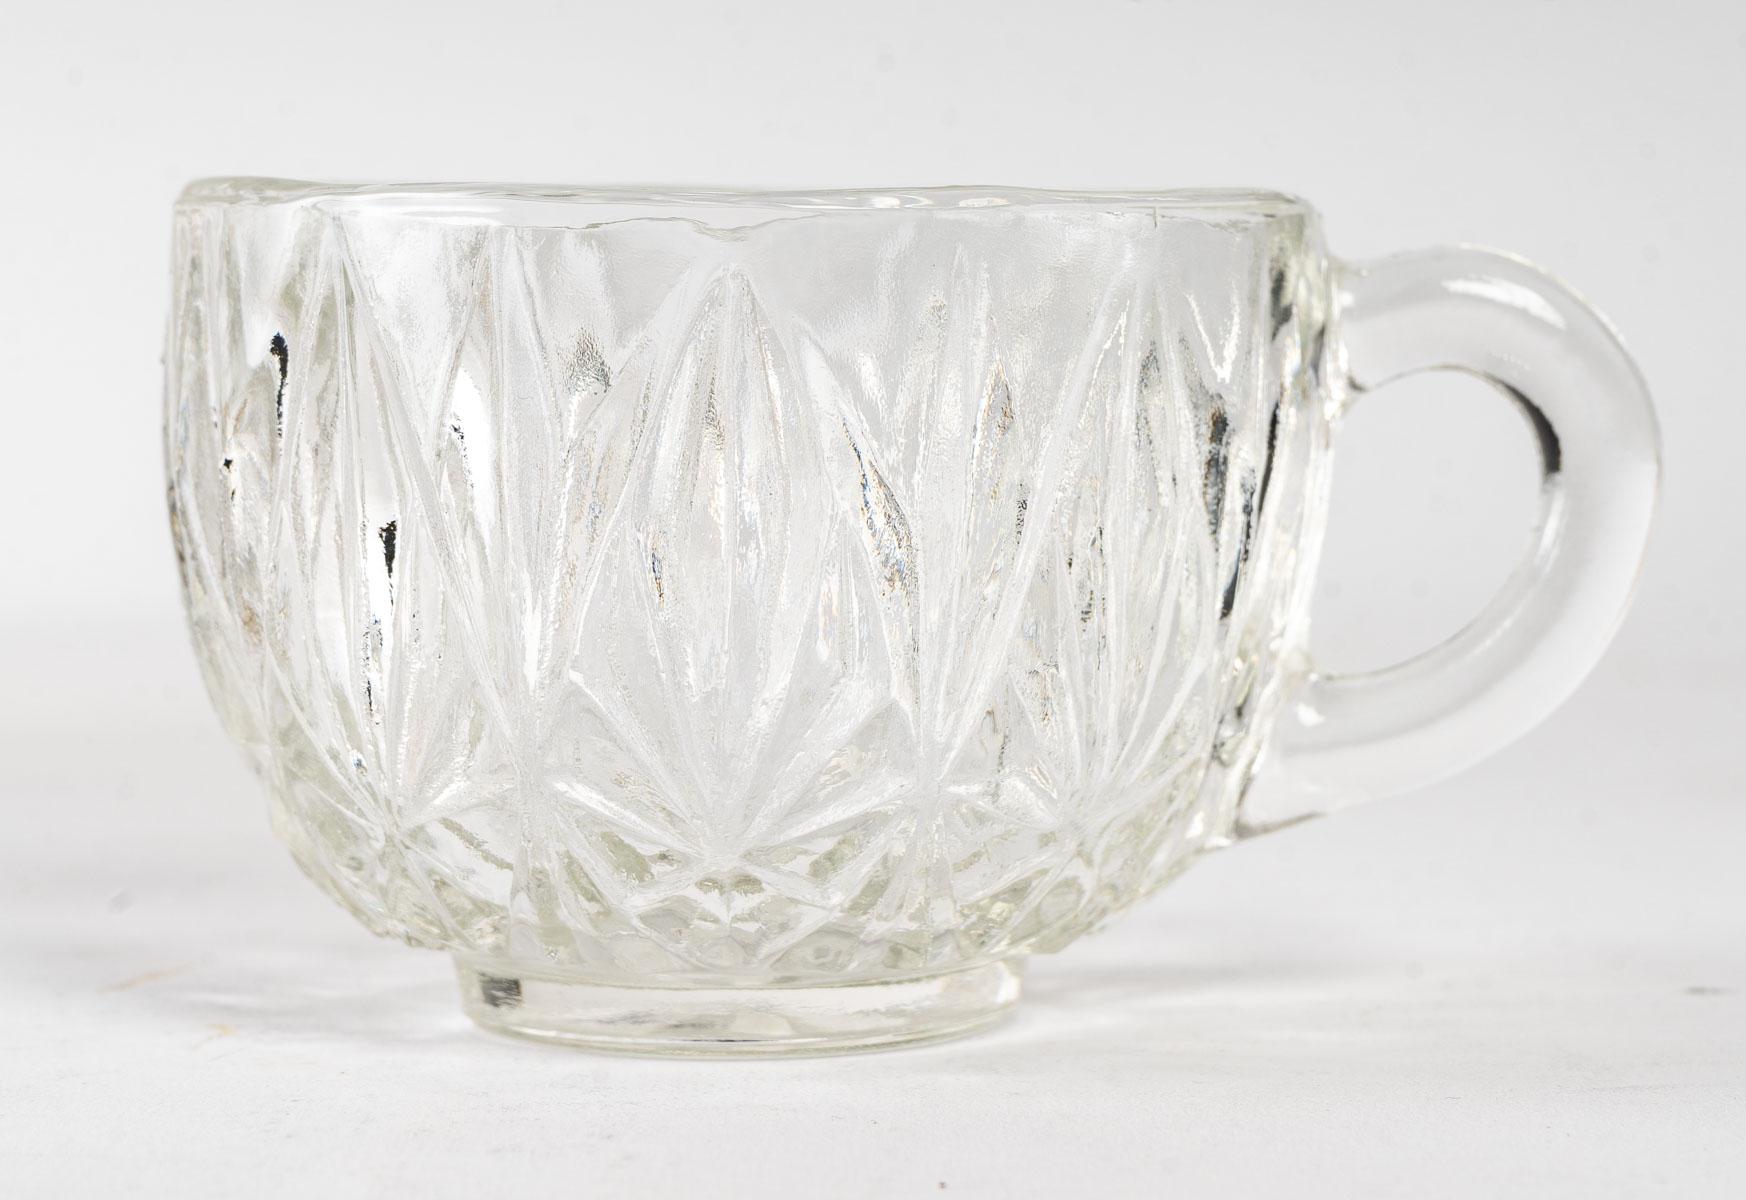 Crystal punch cup, 1950s, 8 cups
Measures: H: 17 cm, W: 28 cm, D: 28 cm.